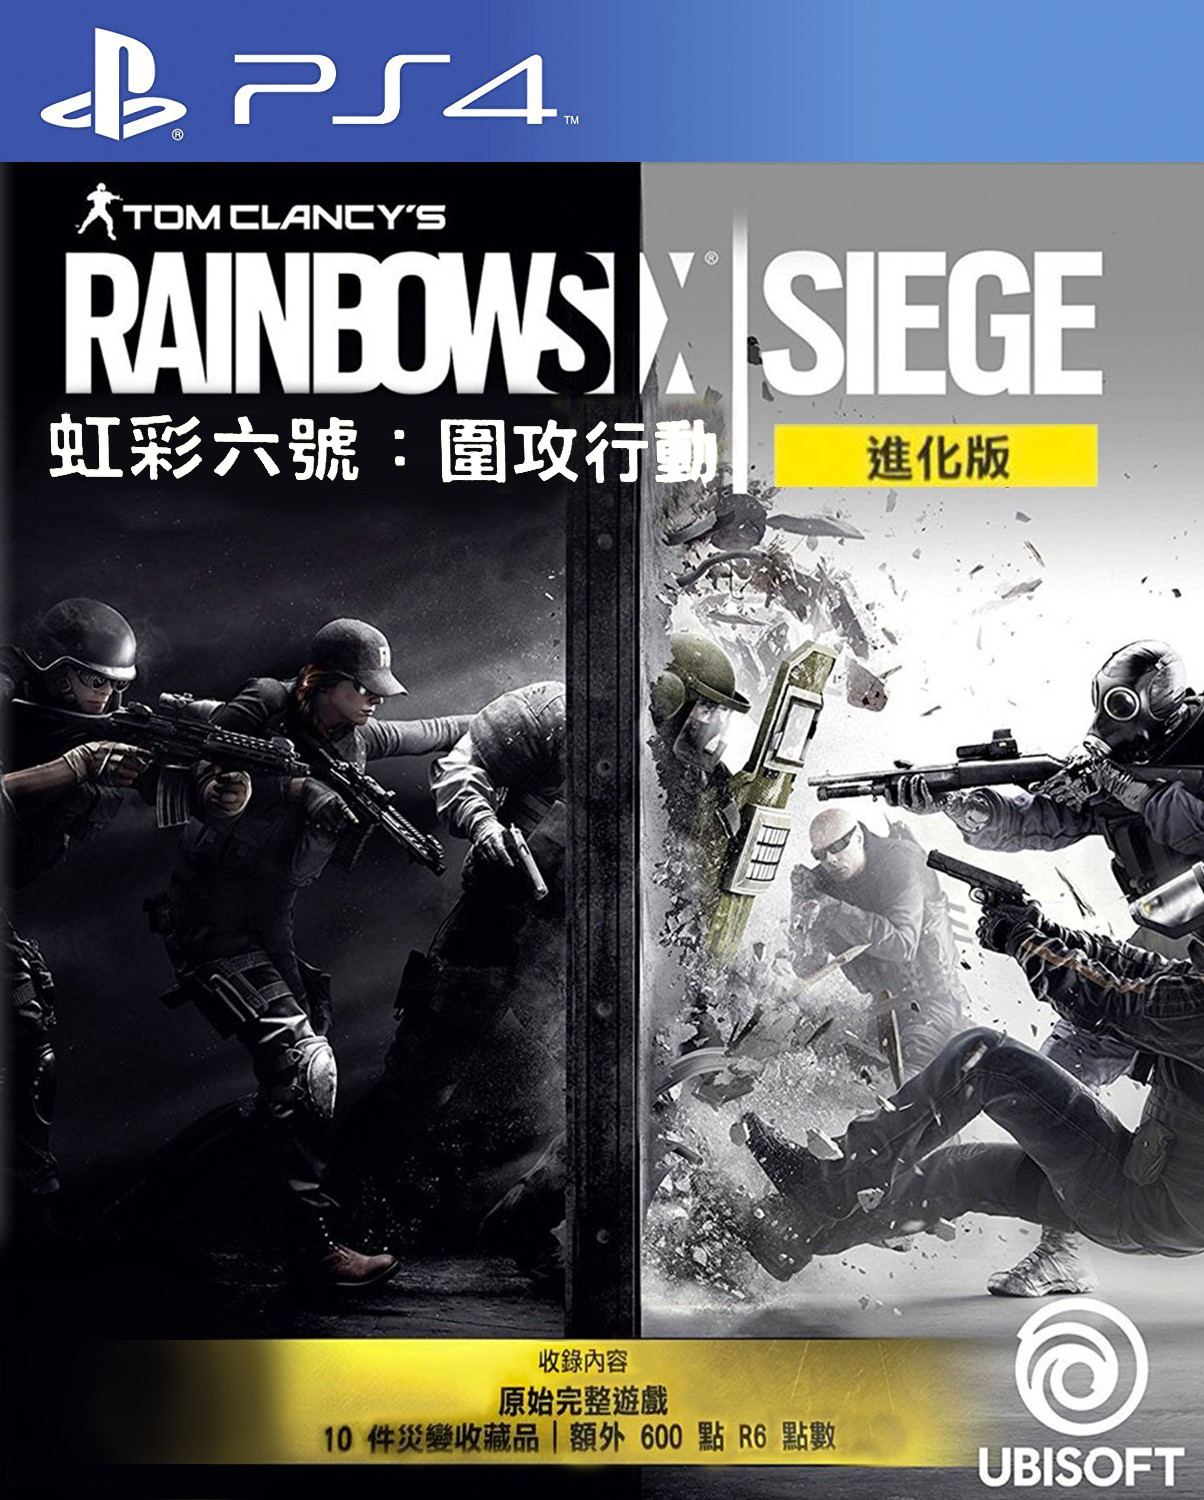 Tom Clancy's Rainbow Siege [Year 3 Advanced Edition] for PlayStation 4